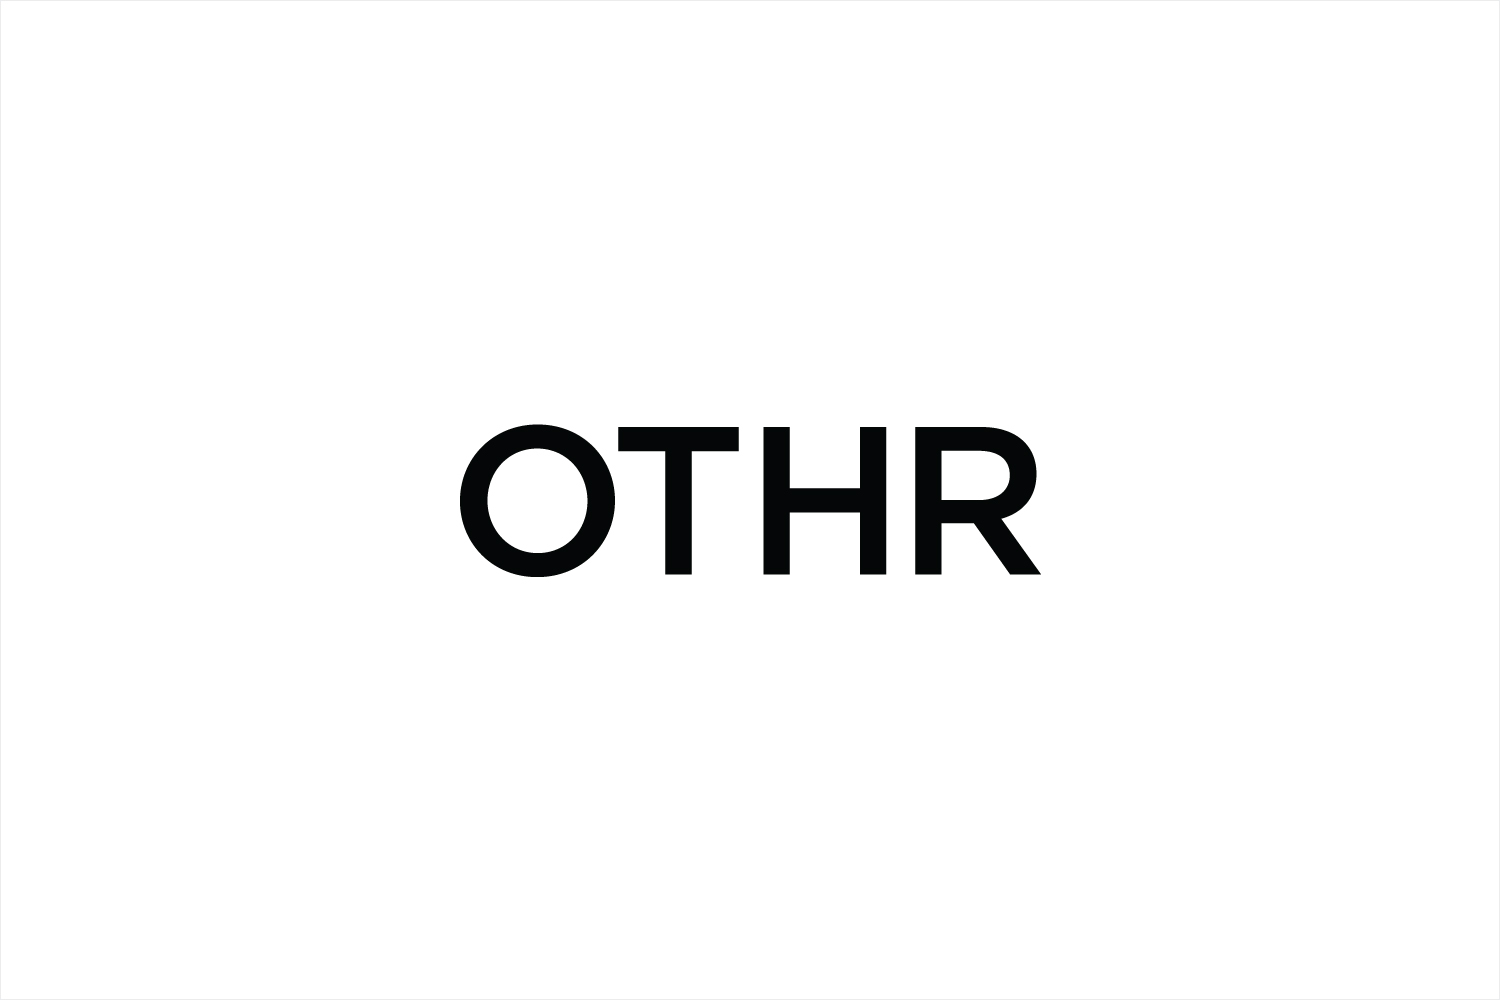 Logotype by New York-based design studio Franklyn for innovative product design company OTHR